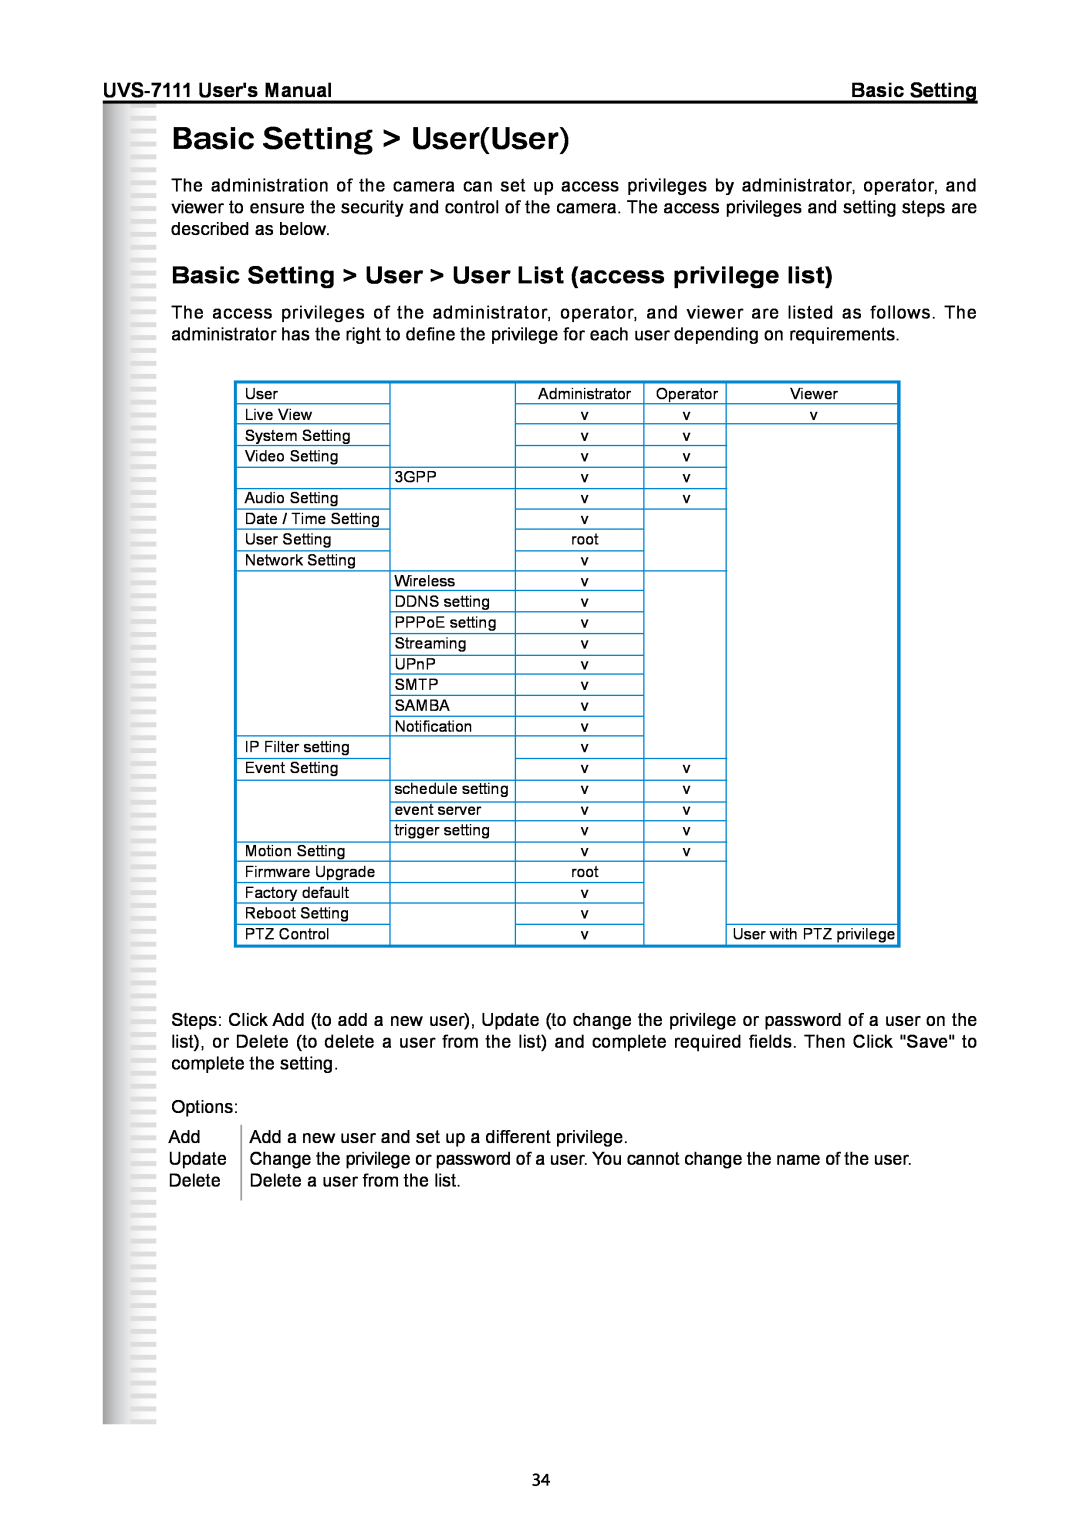 Active Thermal Management UVS-7111 manual Basic Setting UserUser, Basic Setting User User List access privilege list 